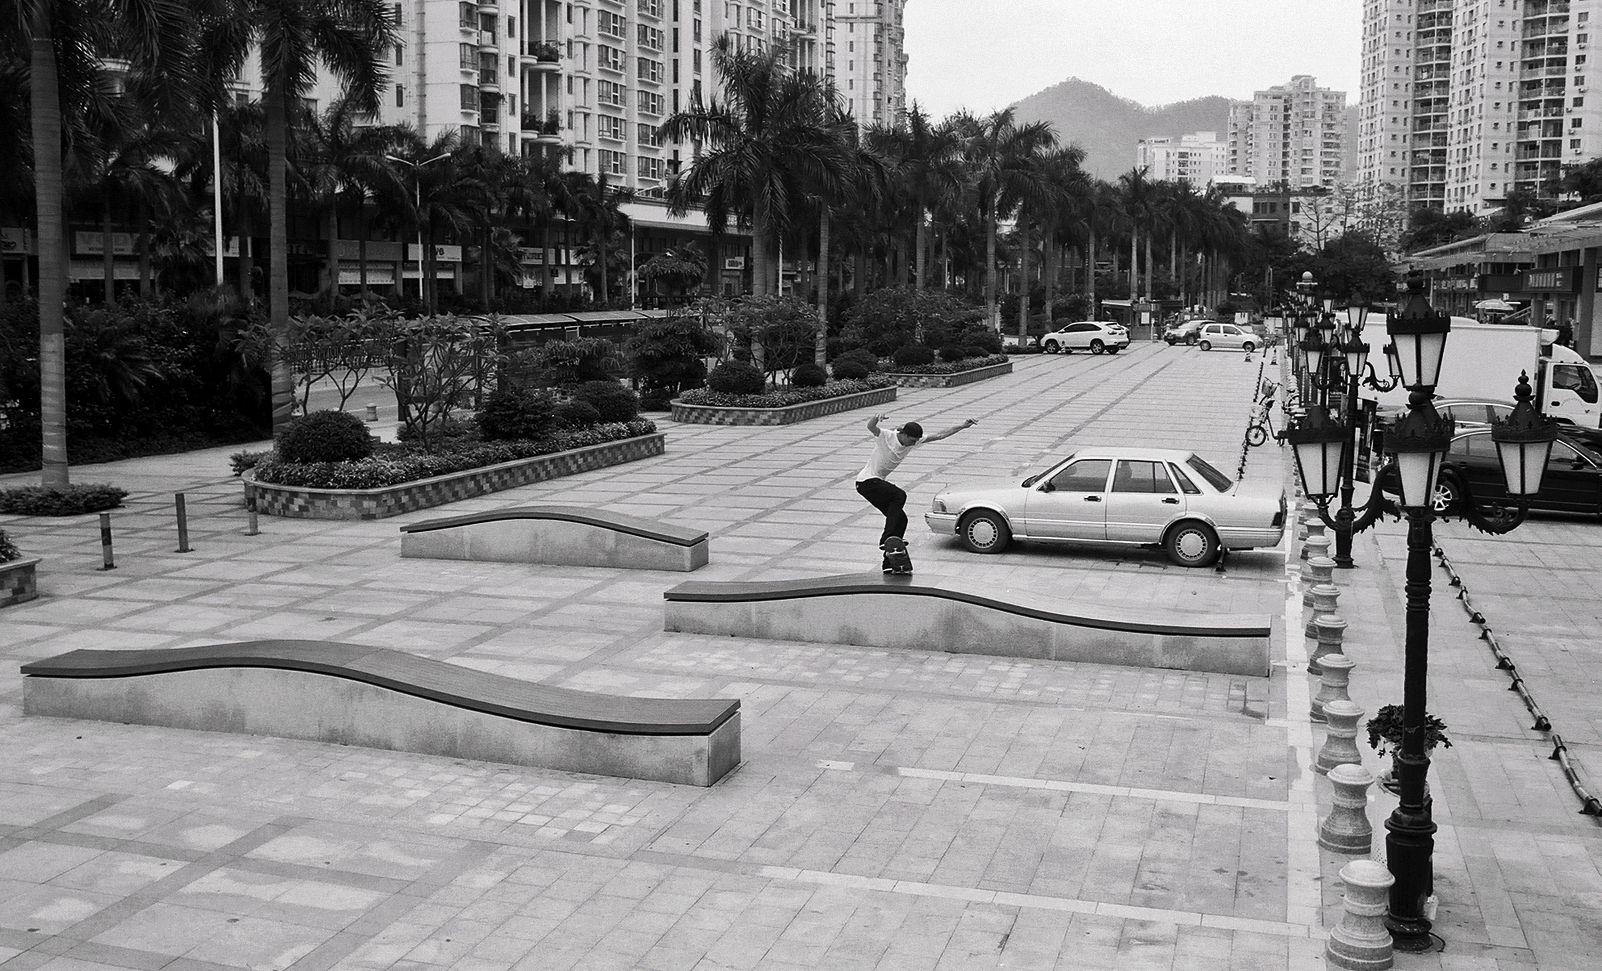 Noseblunt by Patrik Wallner in Shenzhen, China